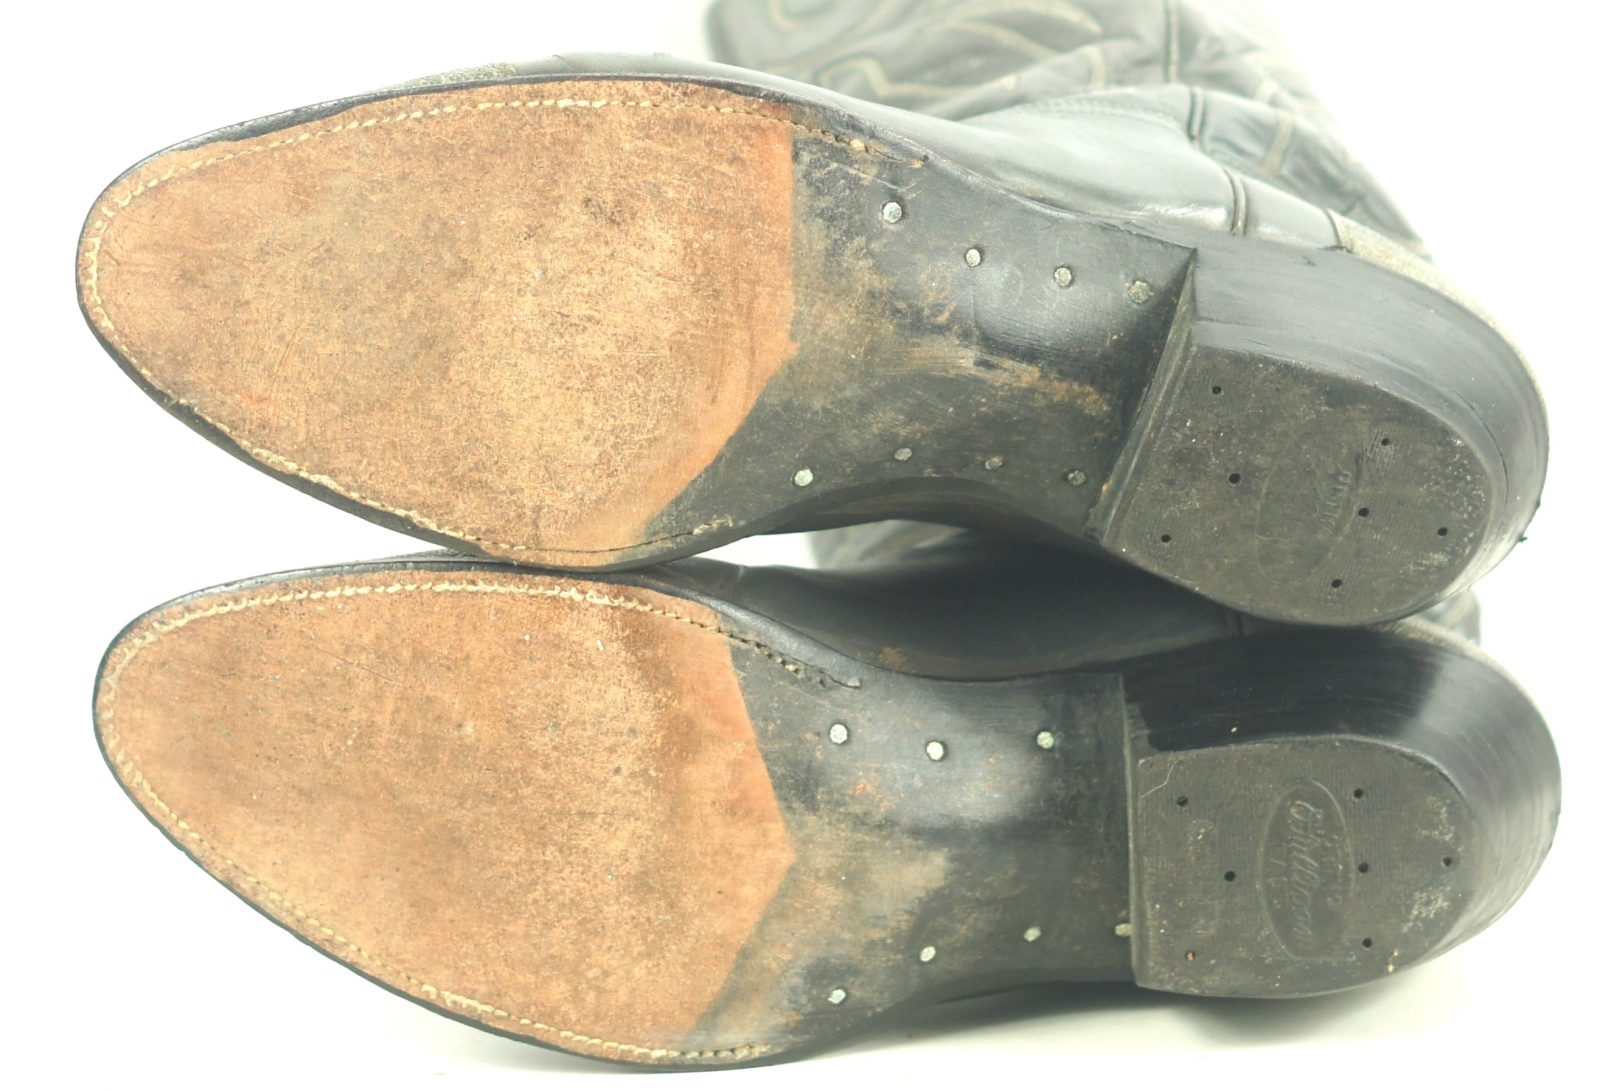 J Chisholm Gray Exotic Wingtip Cowboy Boots Vintage US Handmade Men's